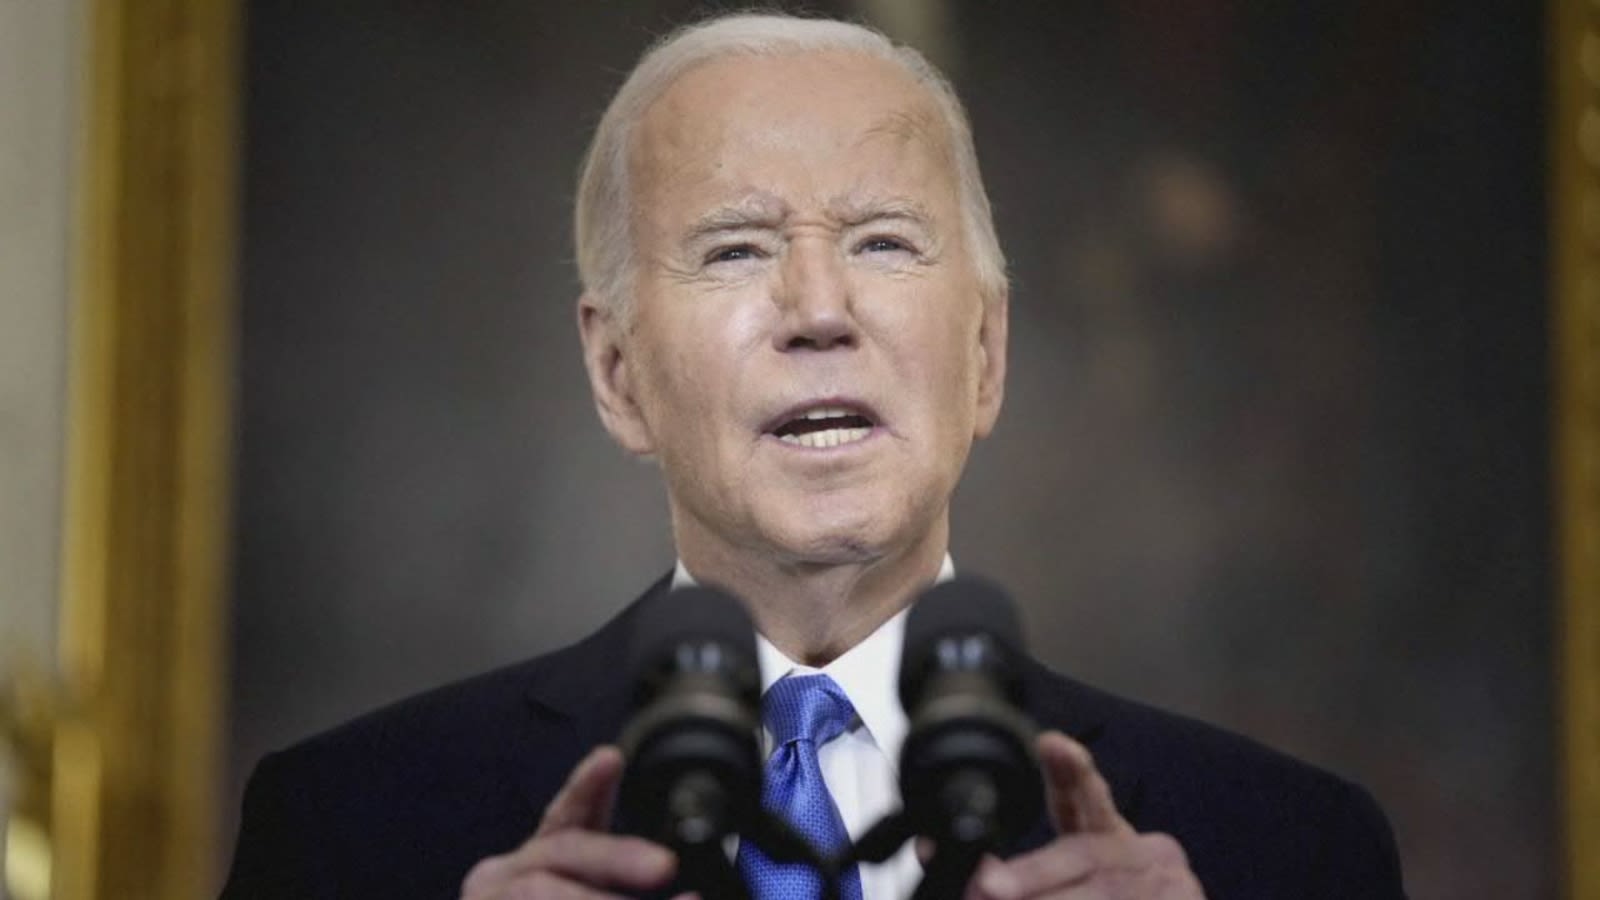 LIVE: President Joe Biden to deliver remarks on the Middle East